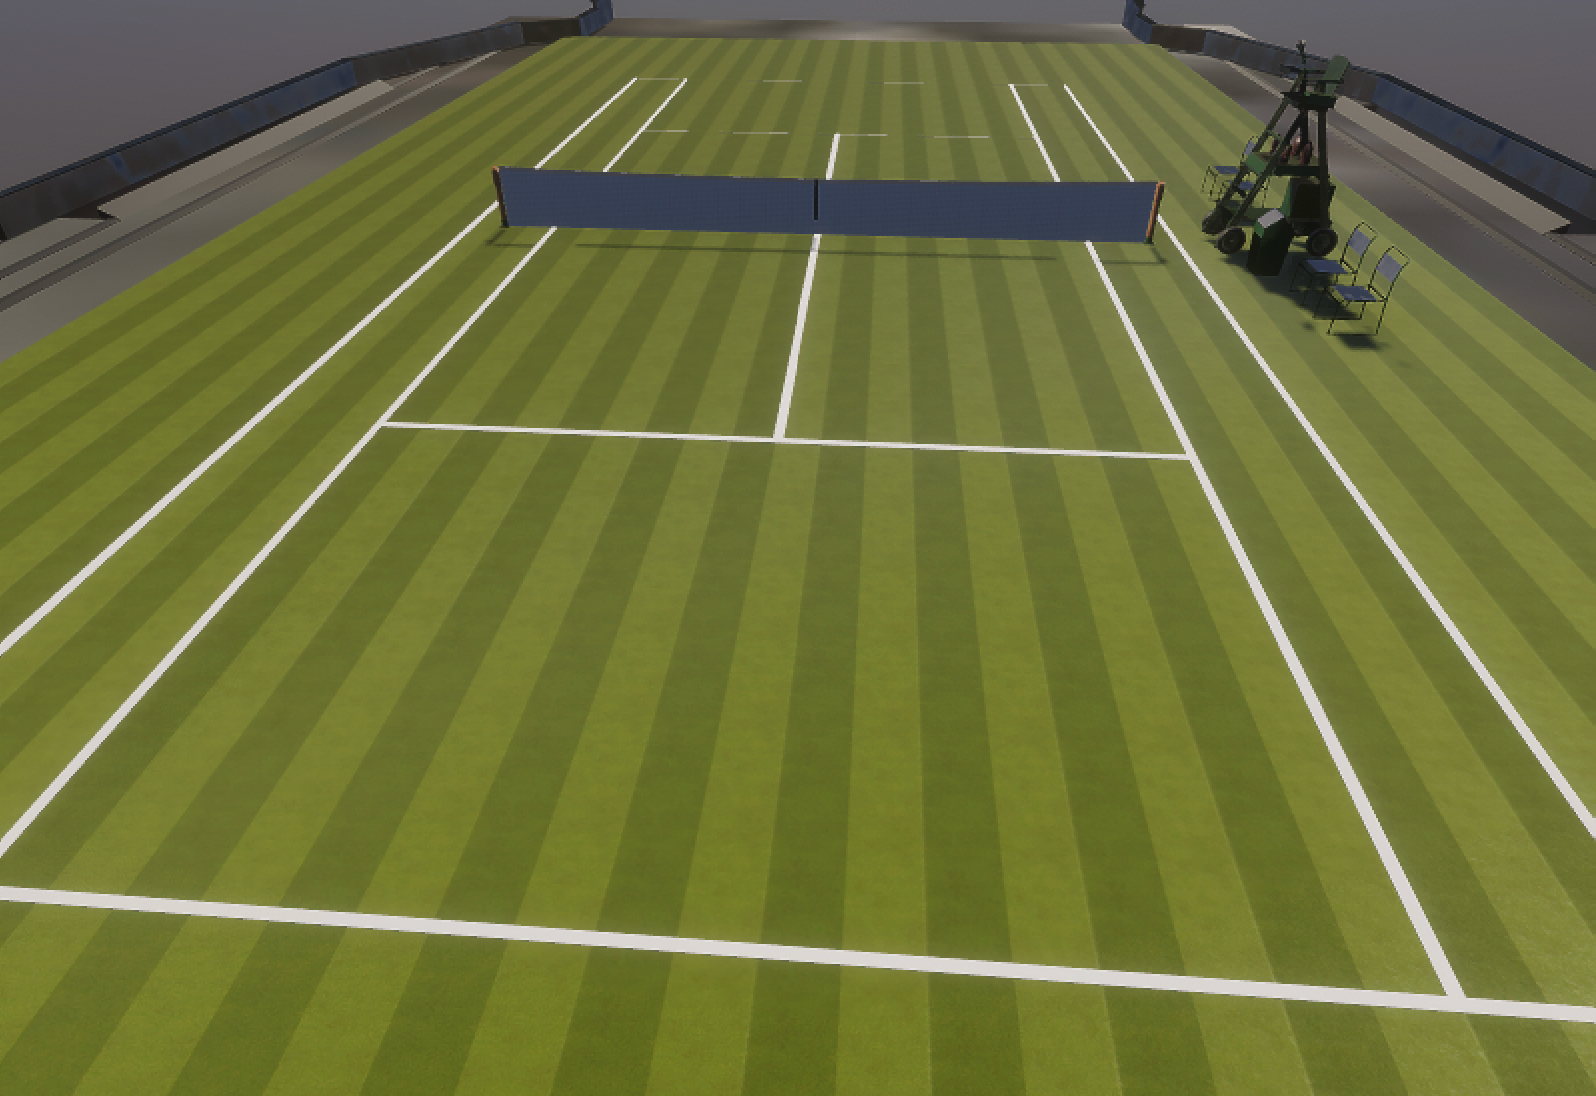 Tennis court line detector: Part 5, test on unseen tennis court